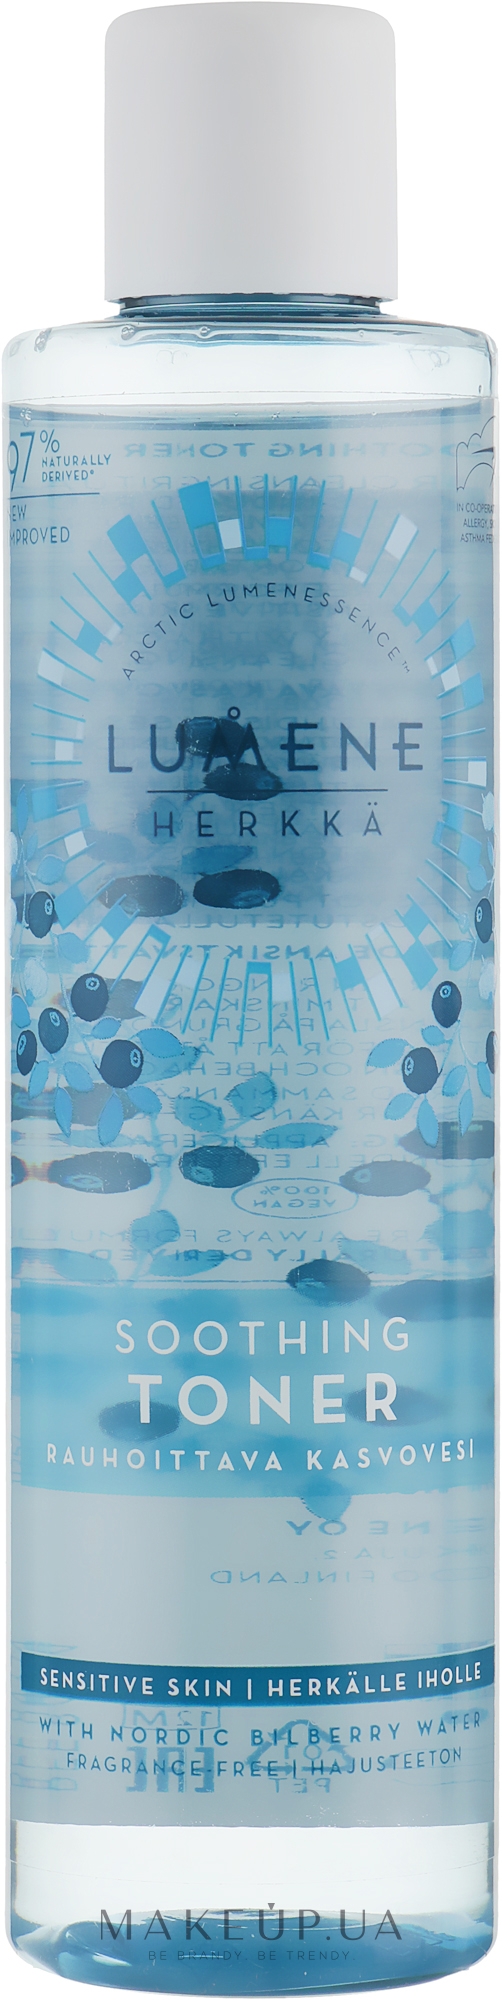 Увлажняющий тонер для лица - Lumene Herkkä Sensitive Soothing Toner — фото 200ml